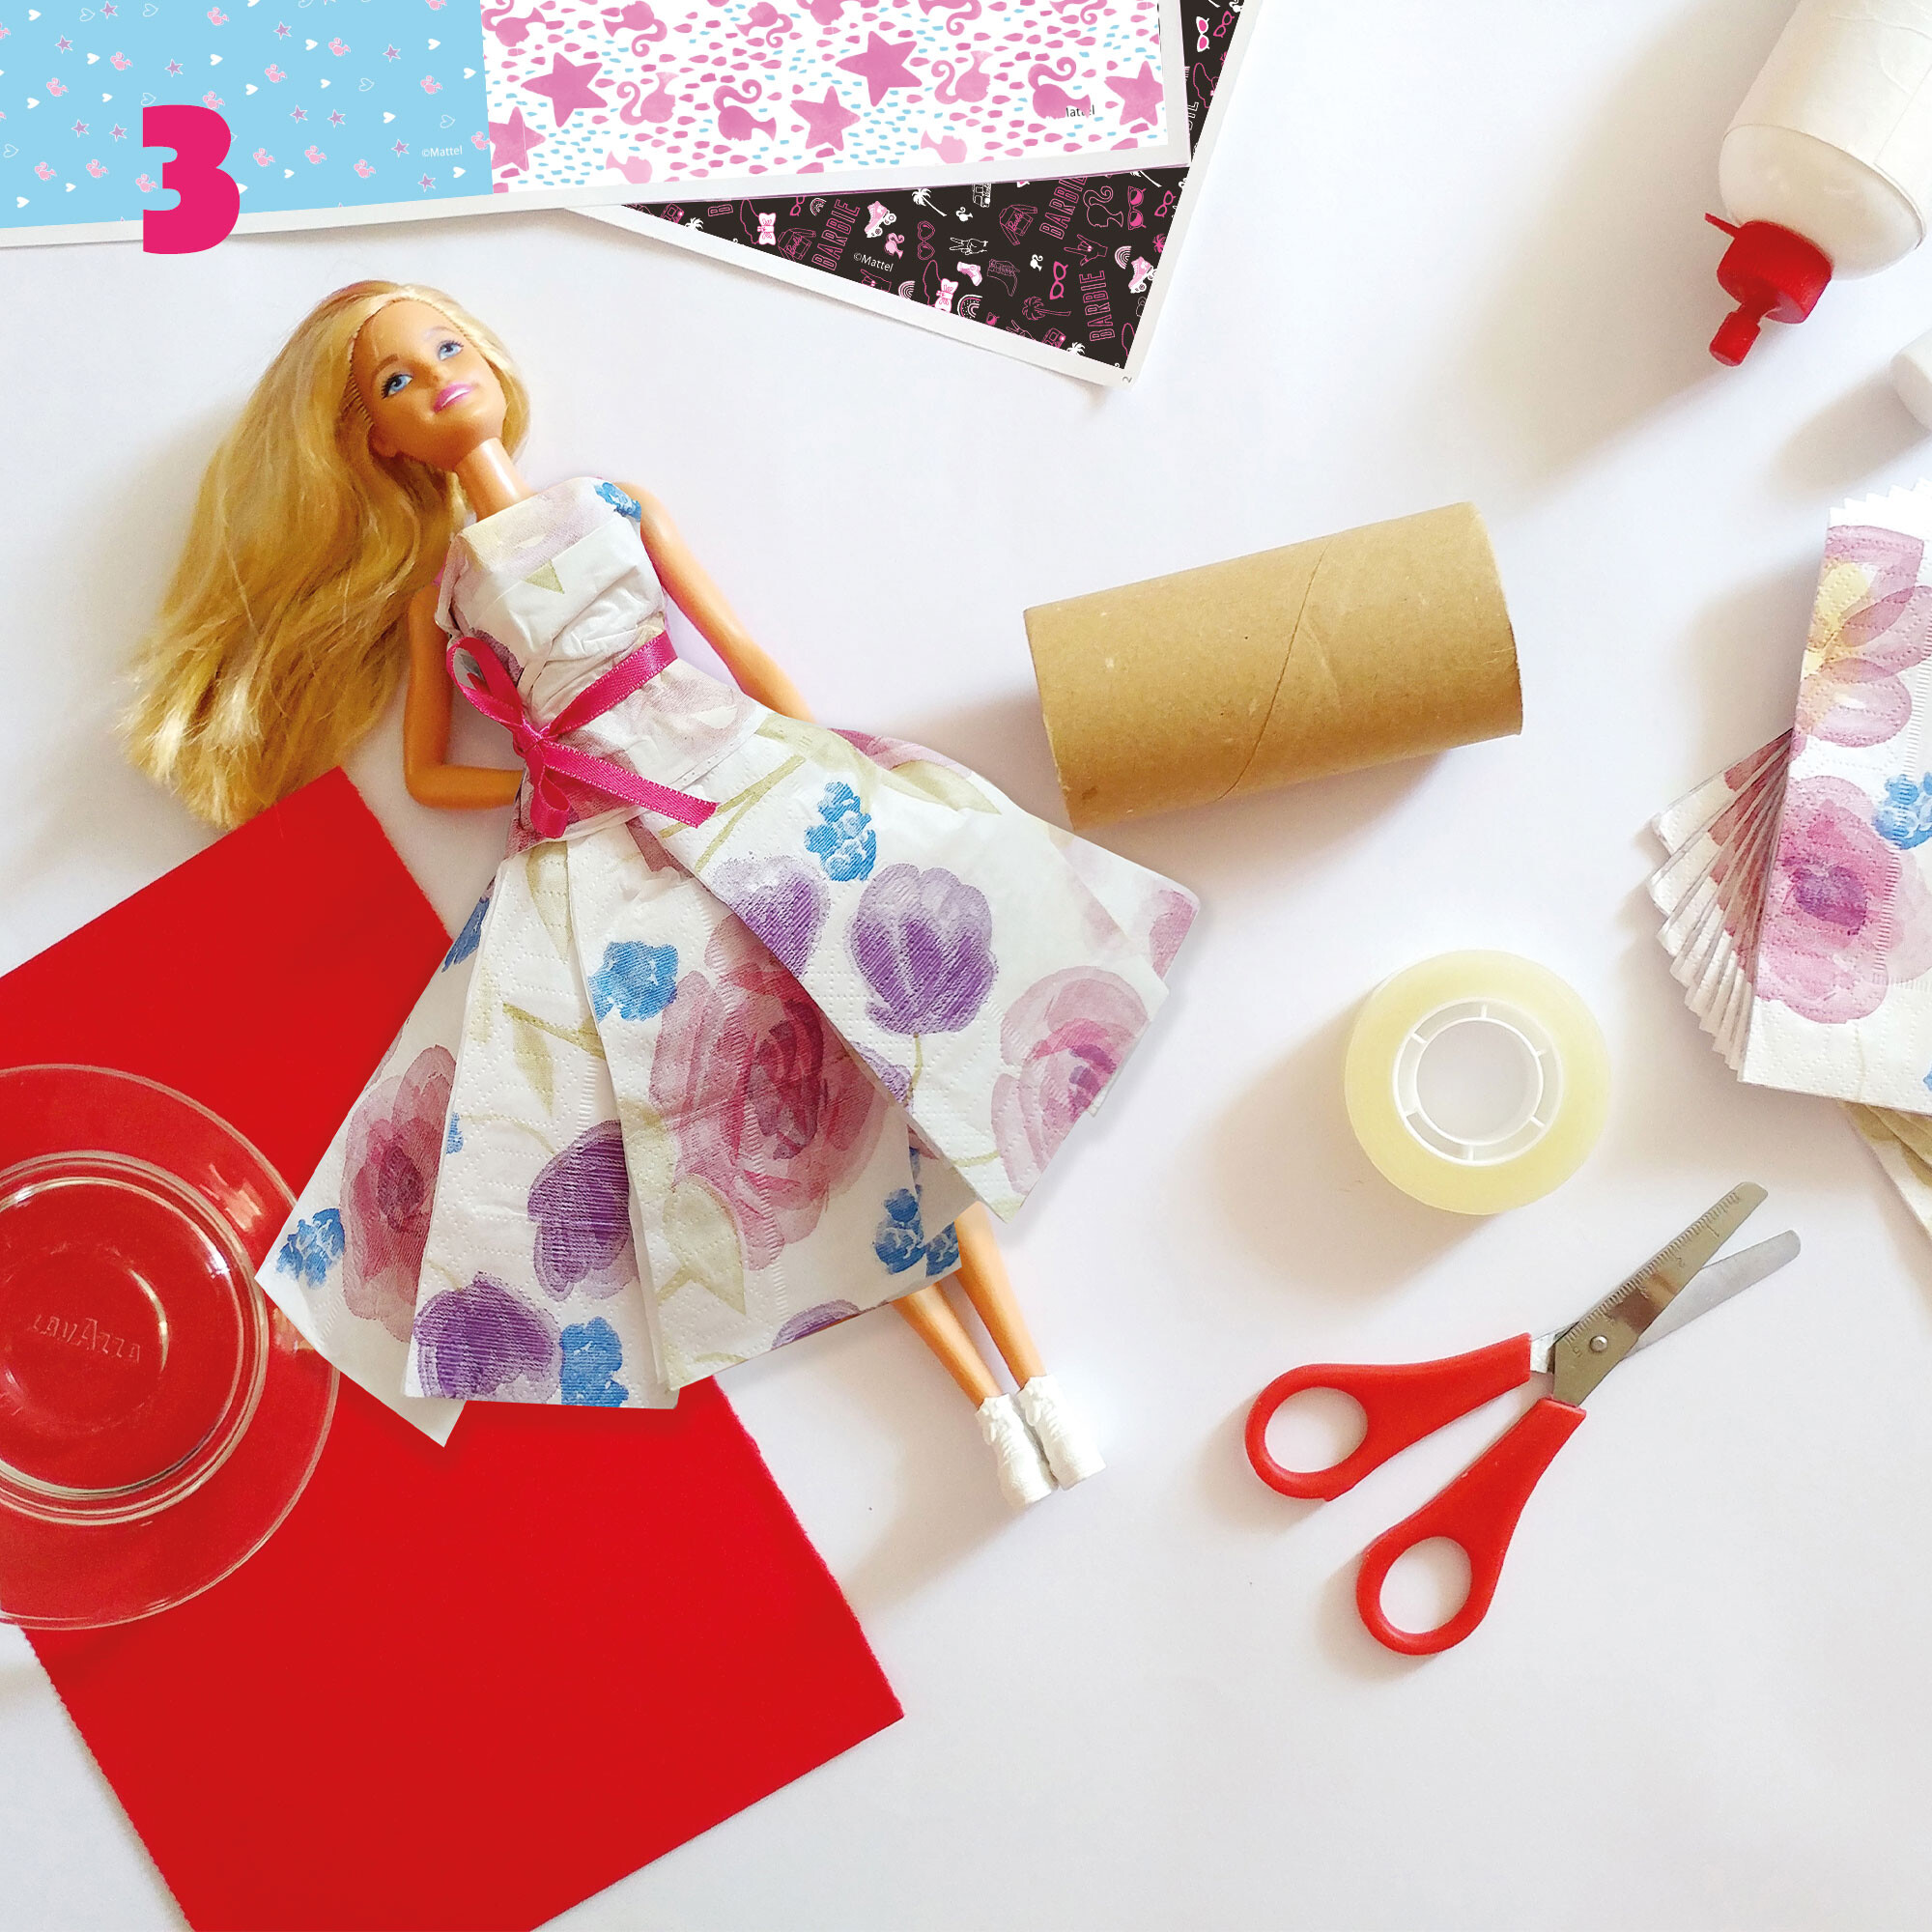 Barbie fashion atelier con doll - LISCIANI, Barbie